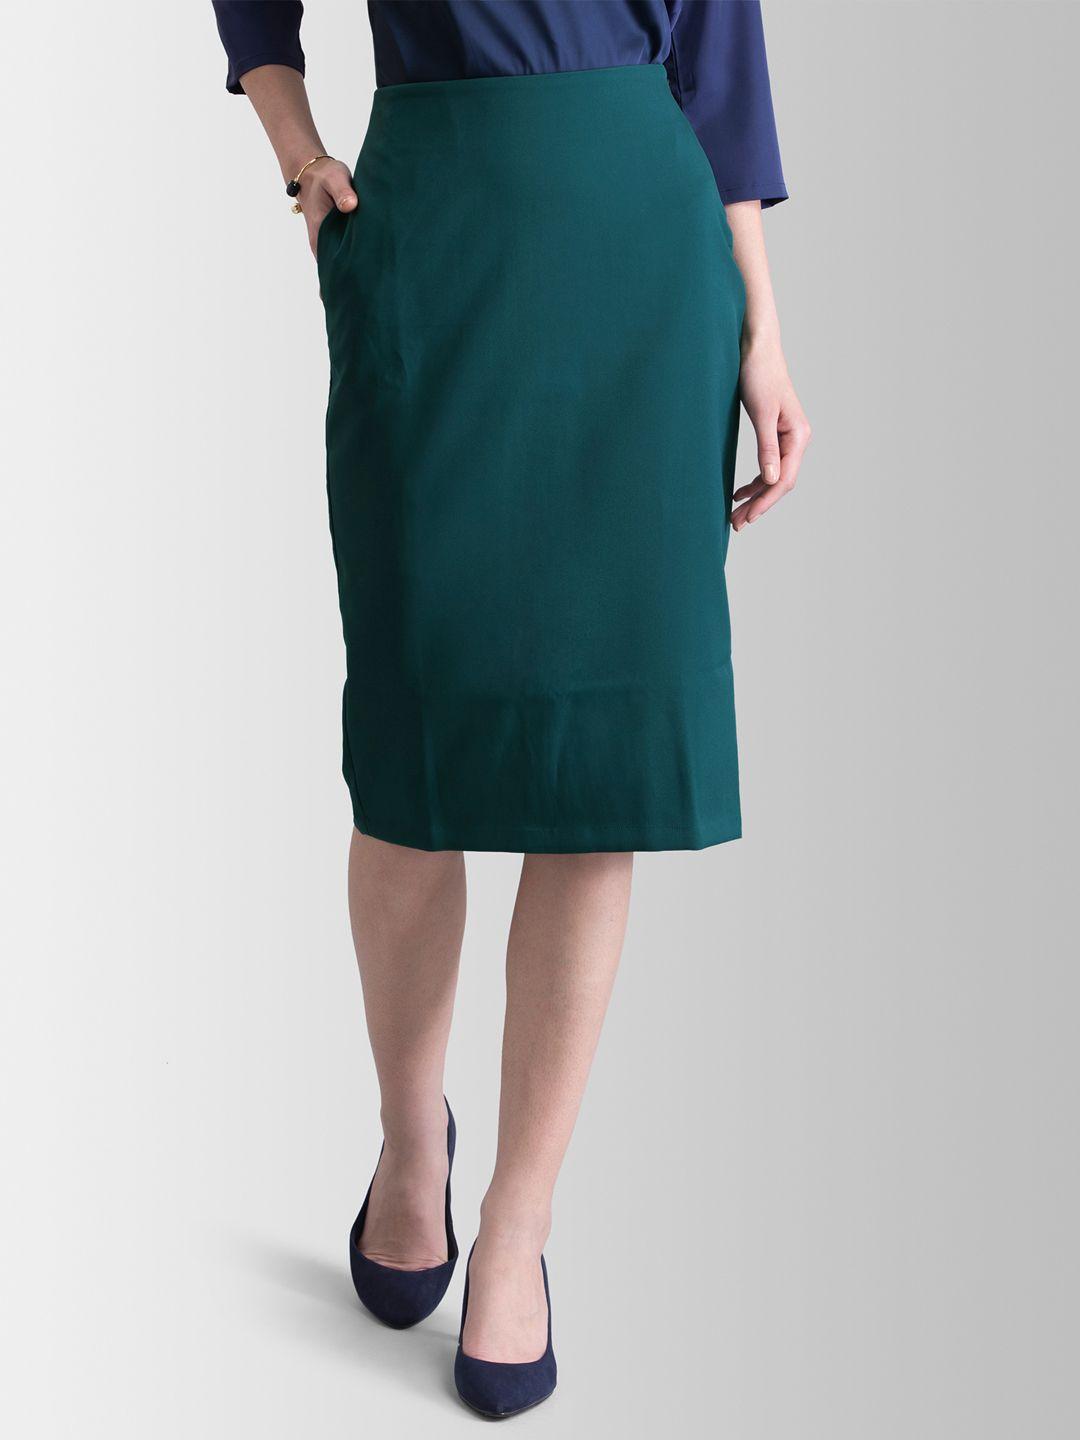 fablestreet-women-green-solid-straight-skirt